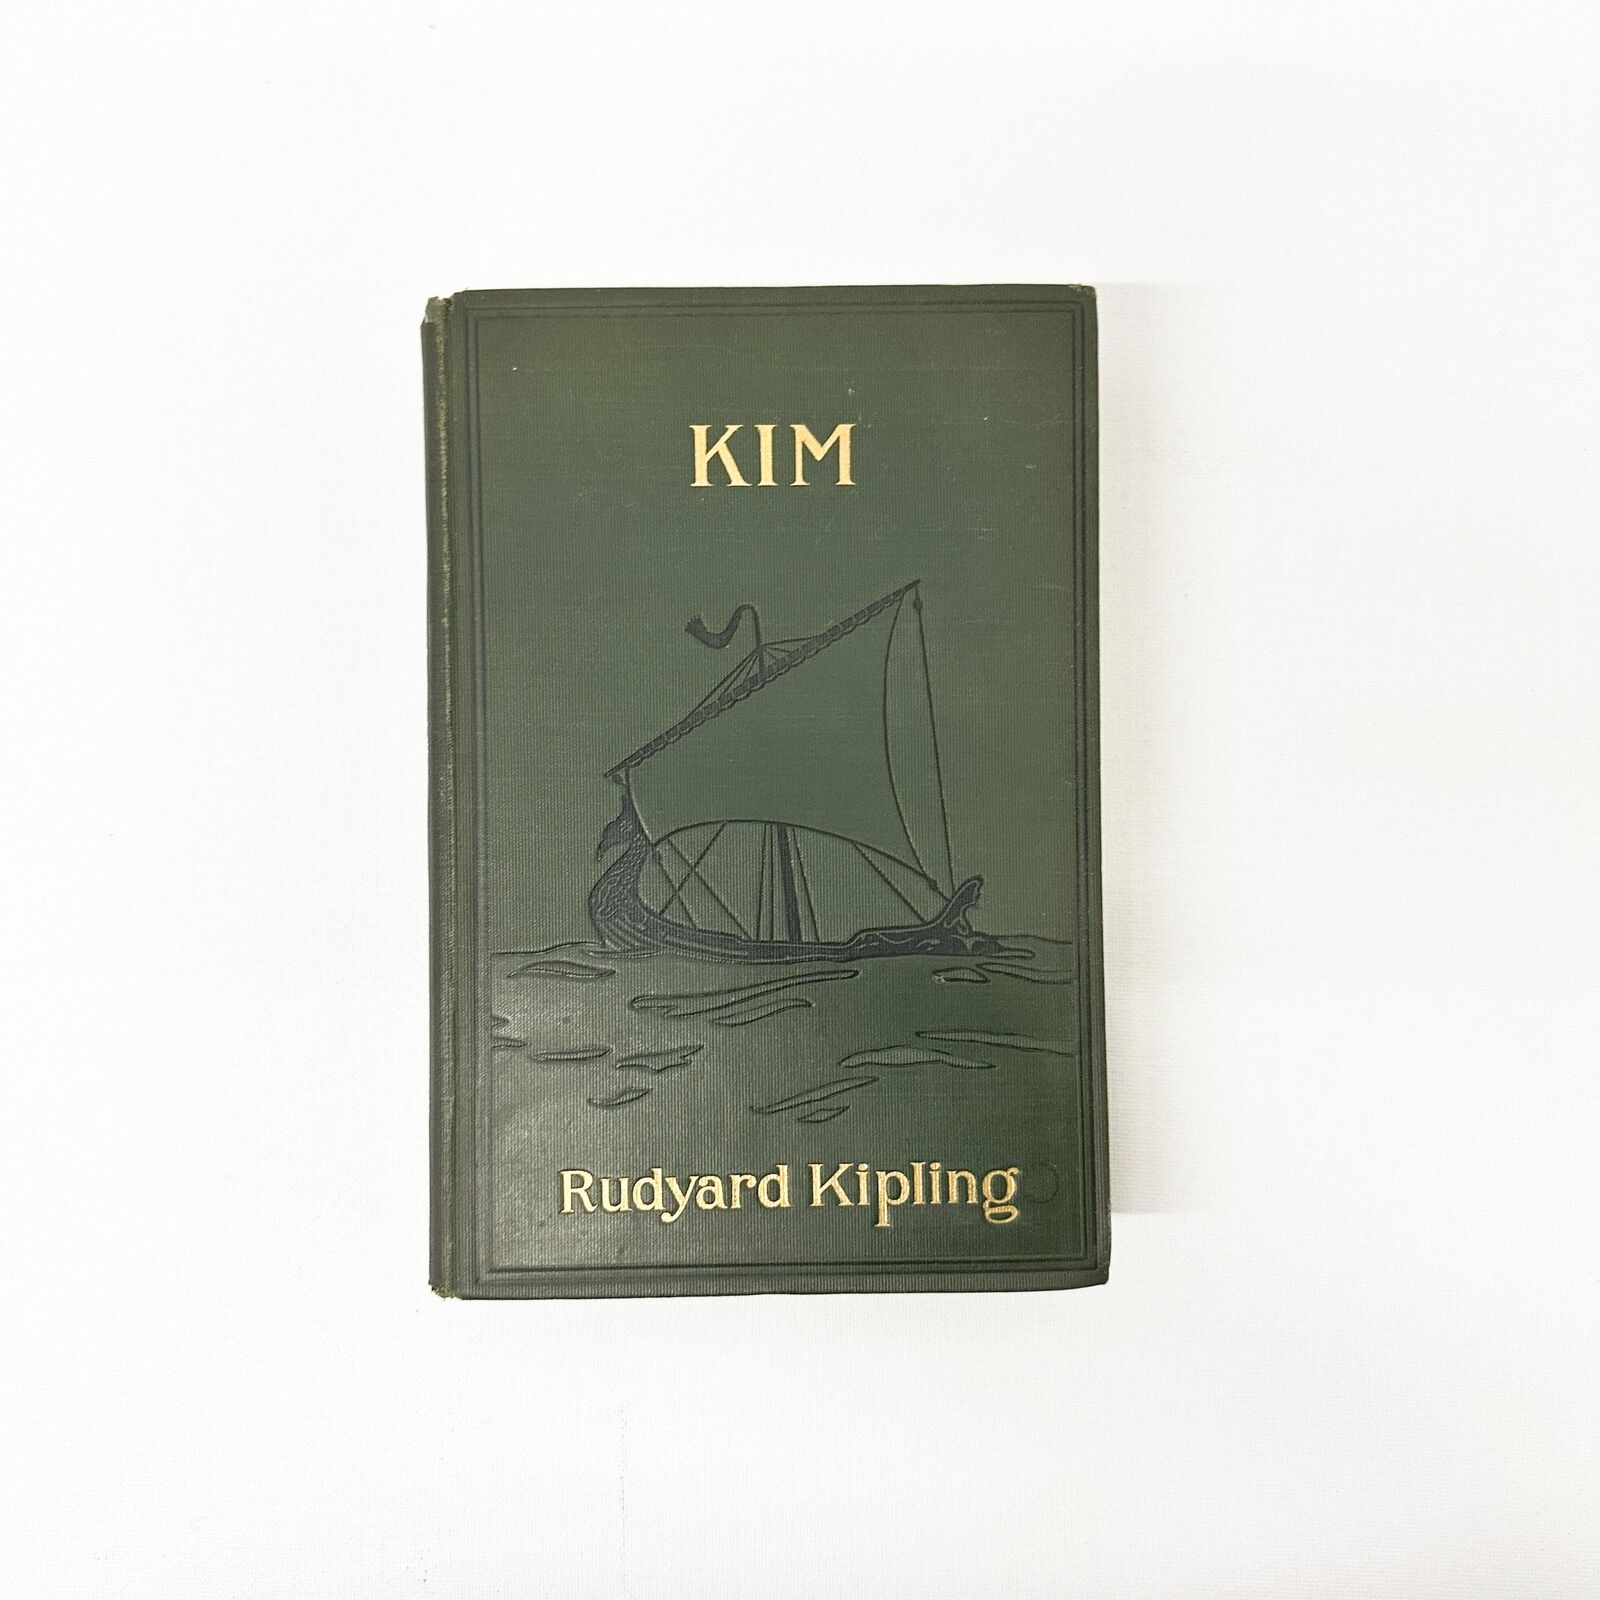 Kim by Rudyard Kipling Rare 1901 First Edition